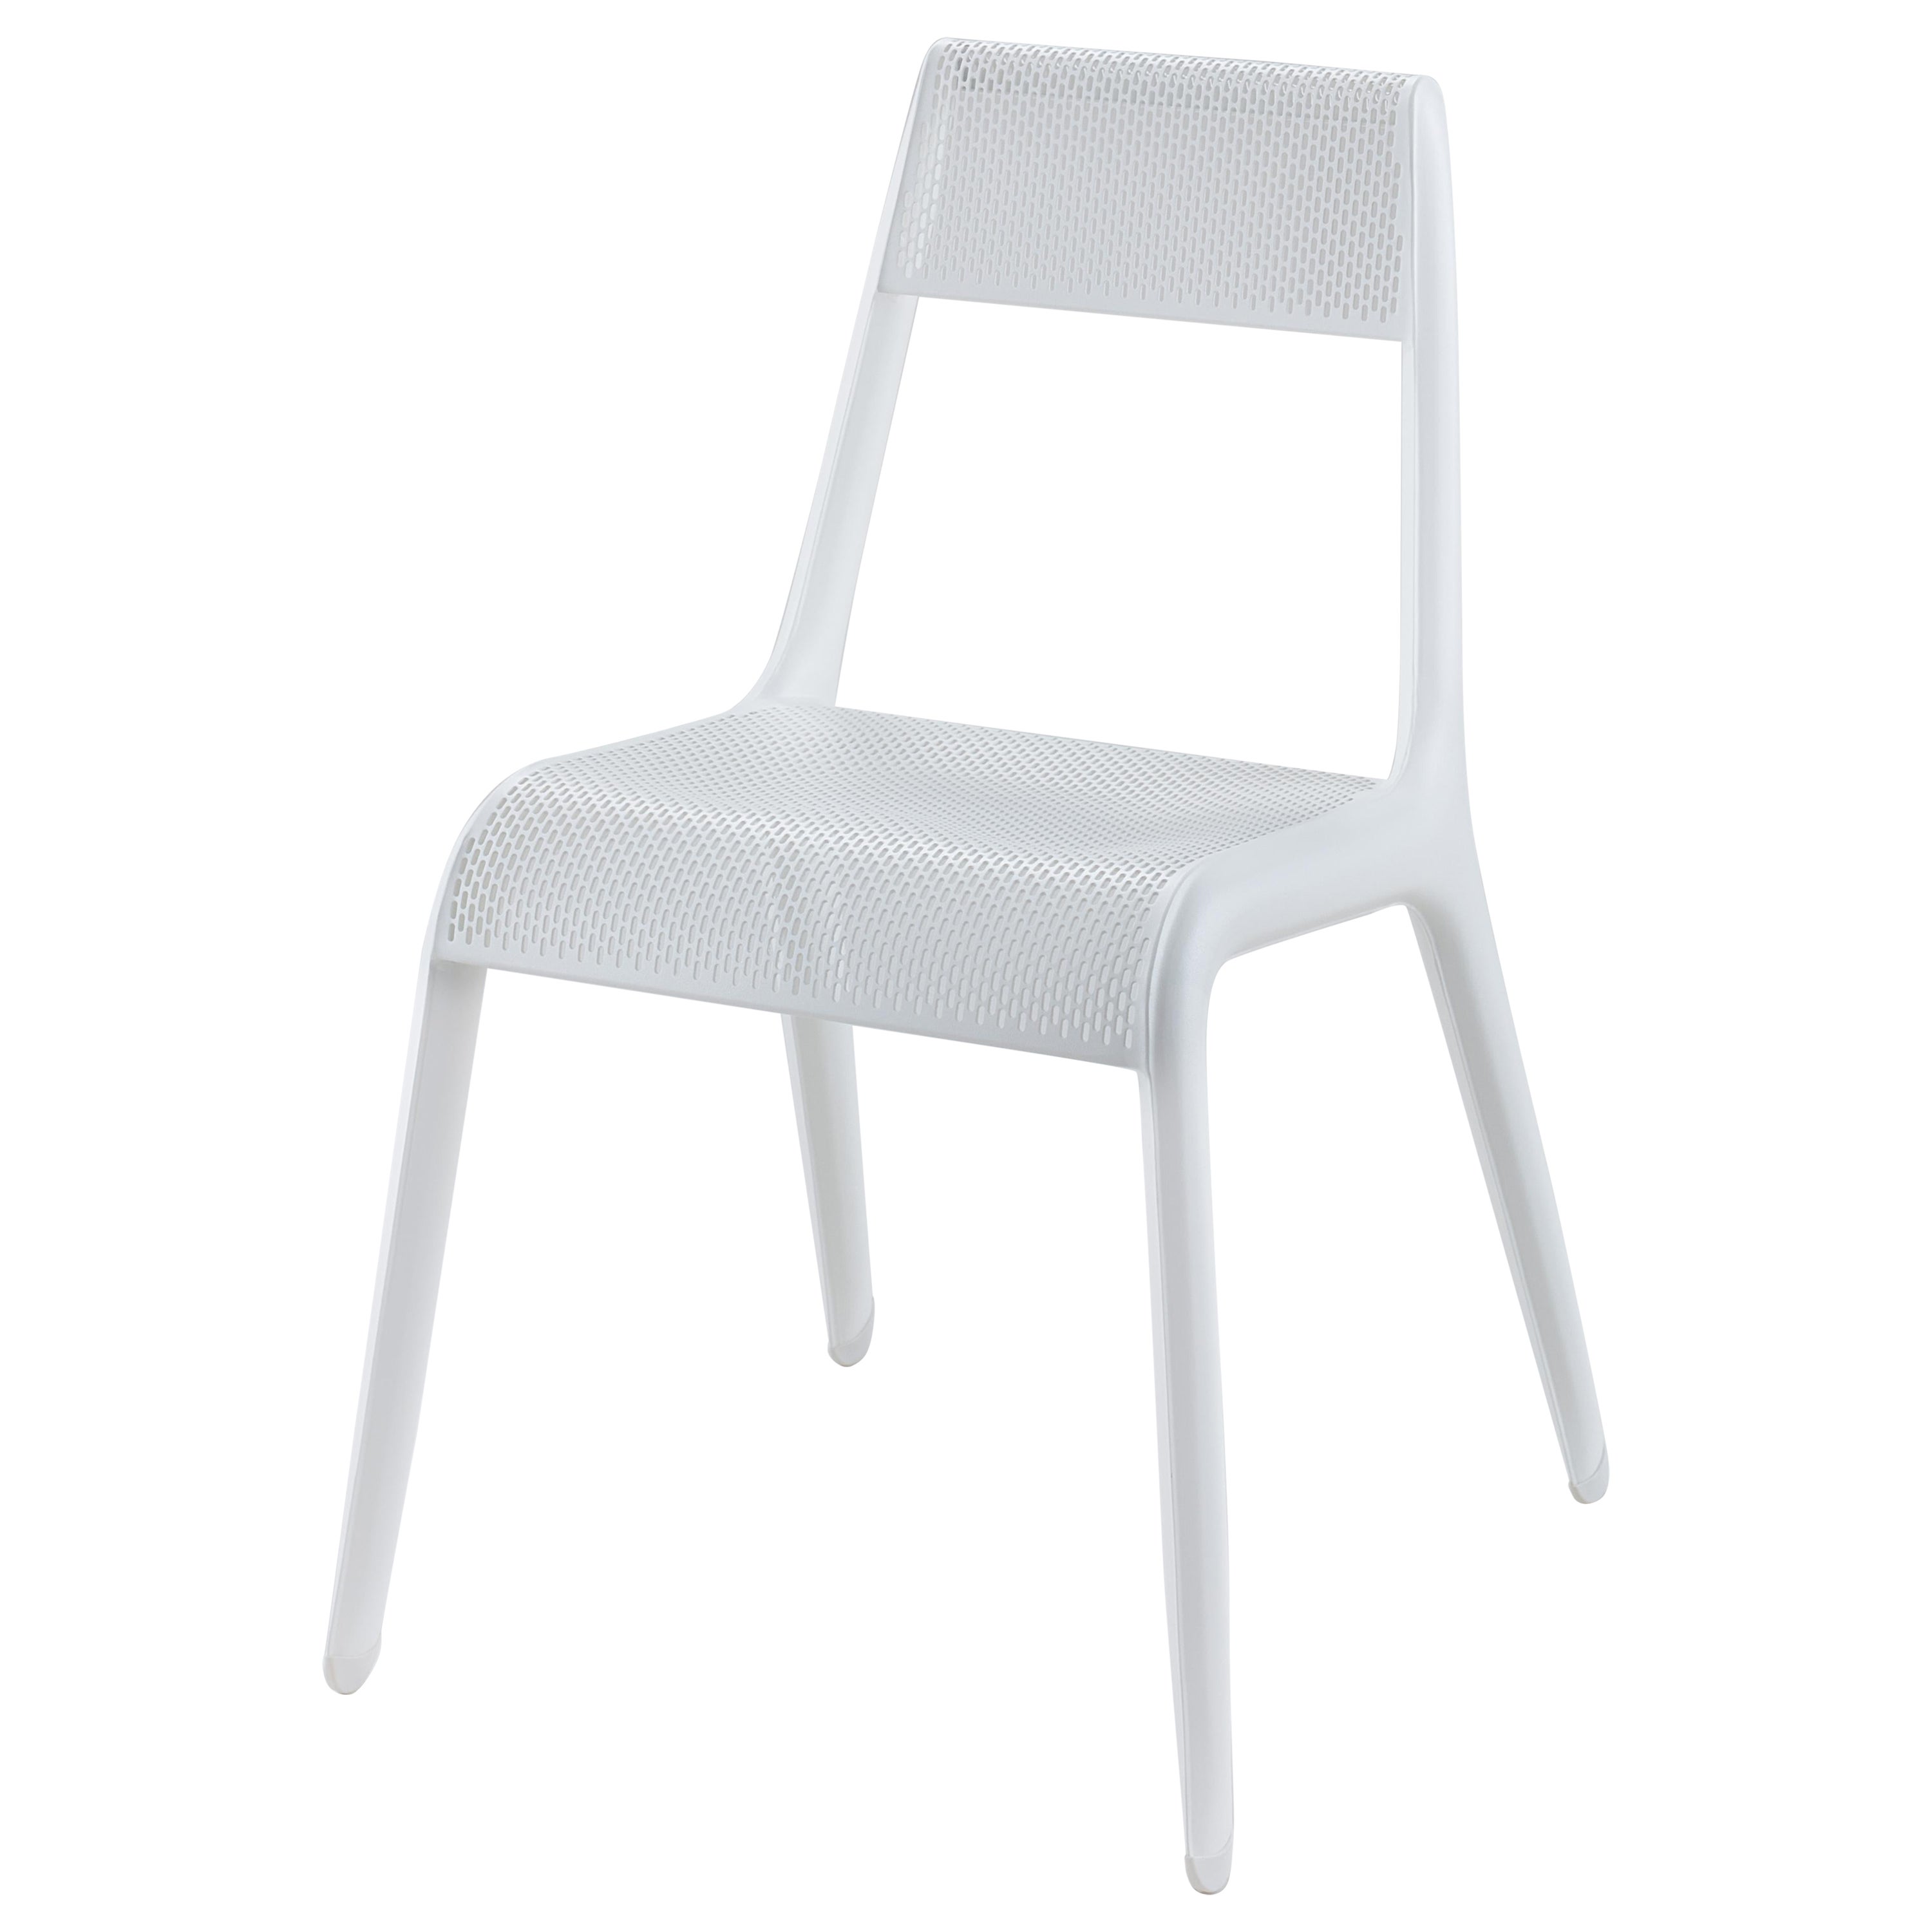 White Matt Ultraleggera Chair by Zieta For Sale